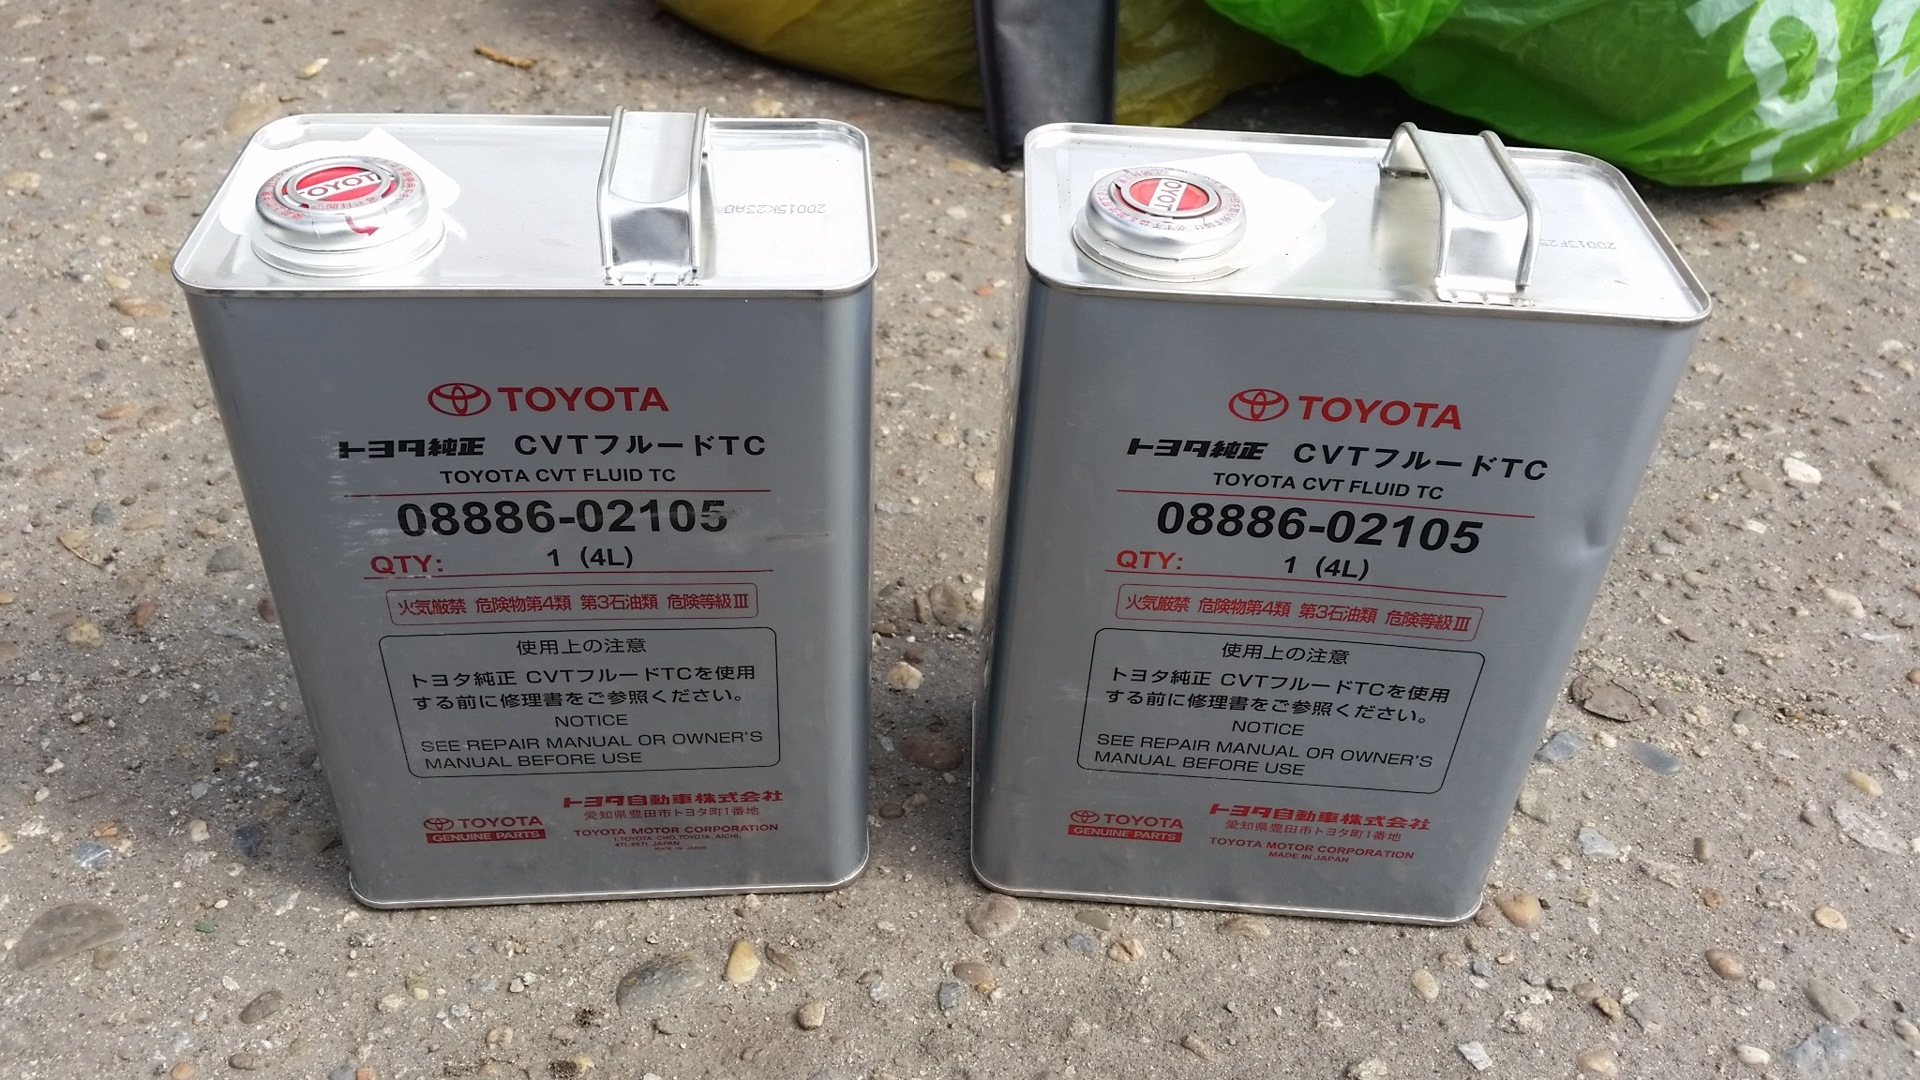 Масло toyota hybrid. Toyota RAV 4 (2013) масло CVT. Toyota Corolla 2014 масло в вариатор. Масло вариатор Тойота рав 2011 артикул. Масло для вариатора Тойота рав 4.